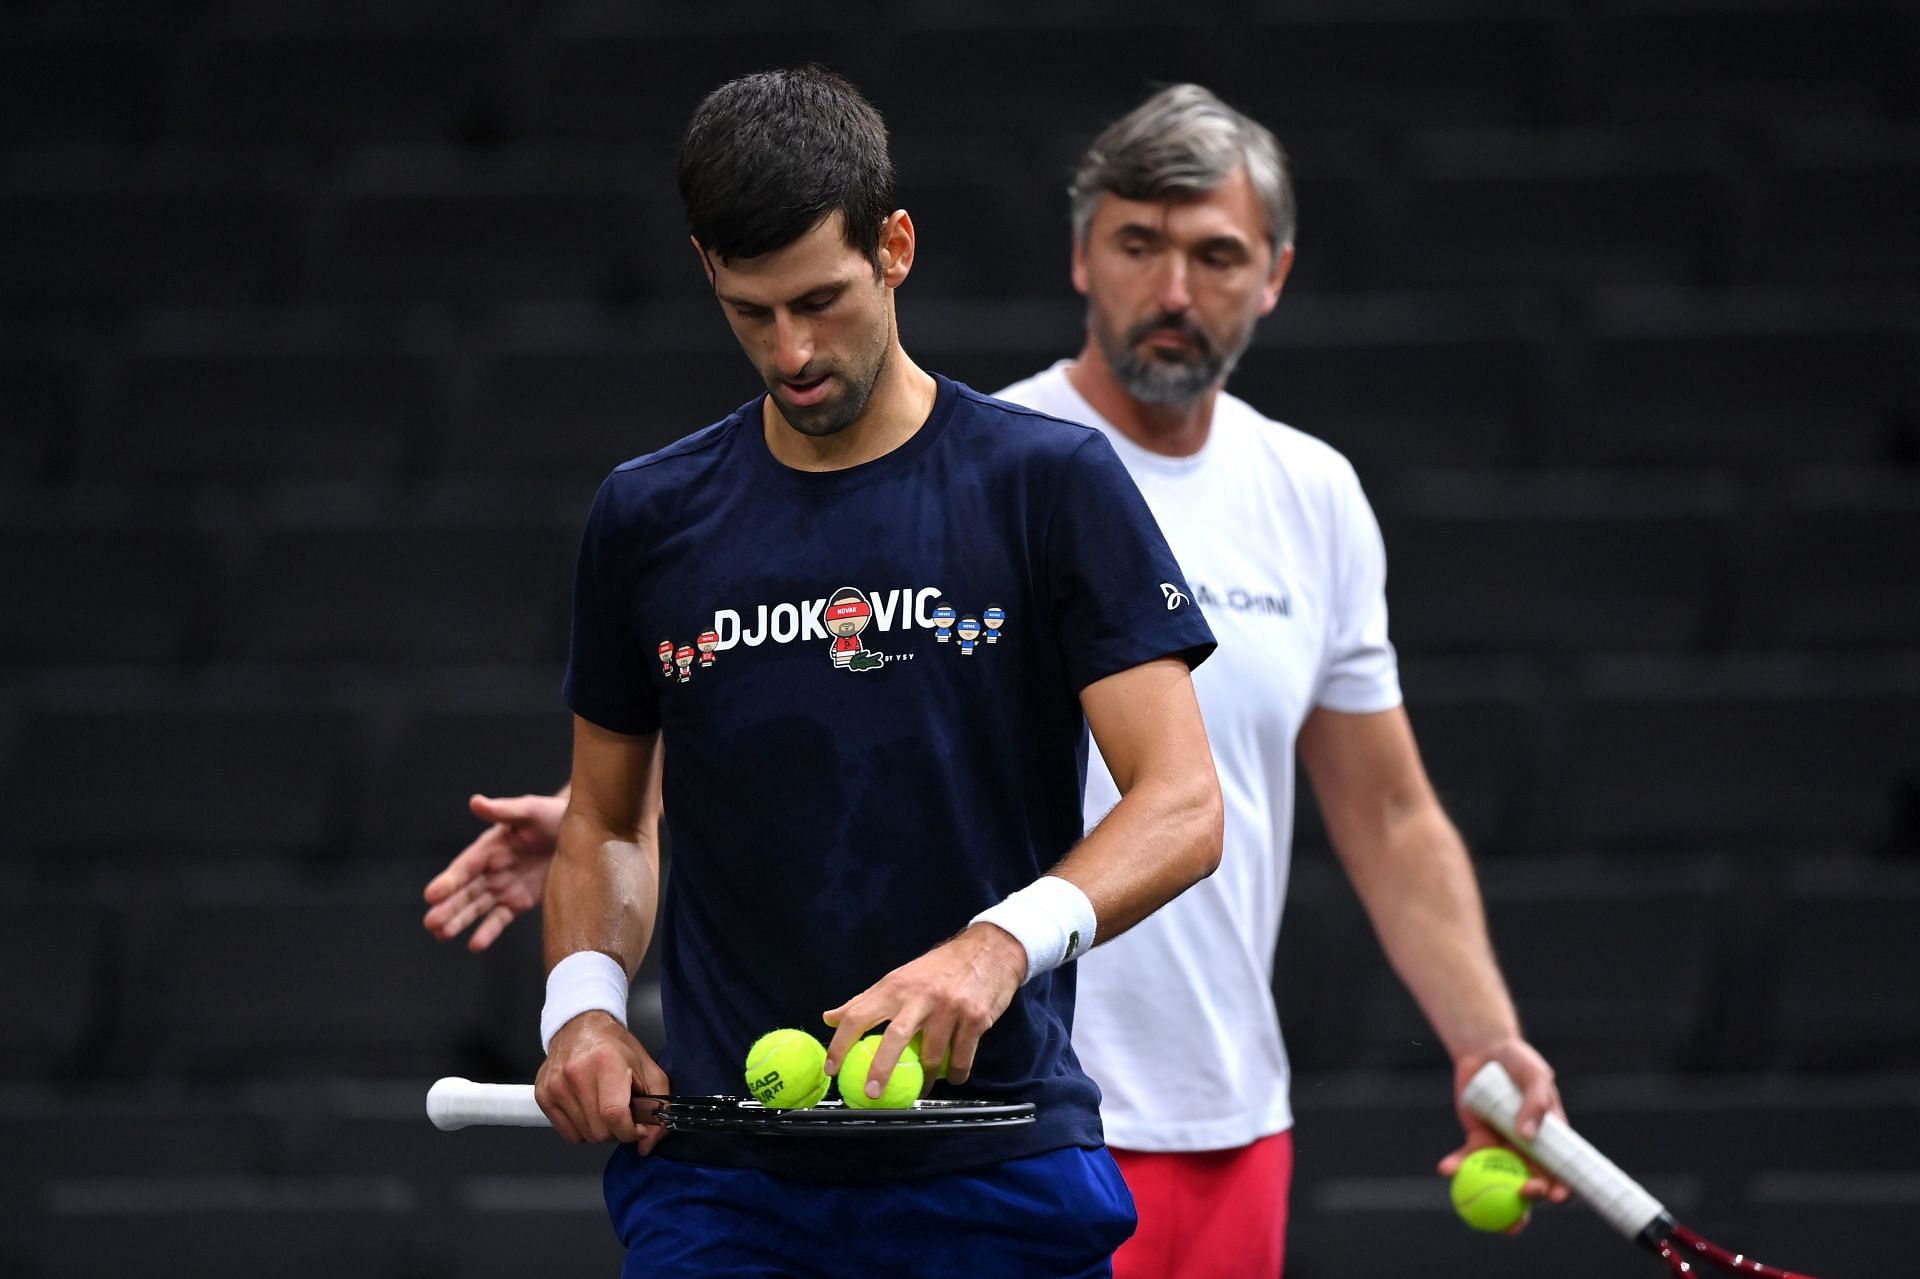 Novak Djokovic and Goran Ivanisevic pictured together